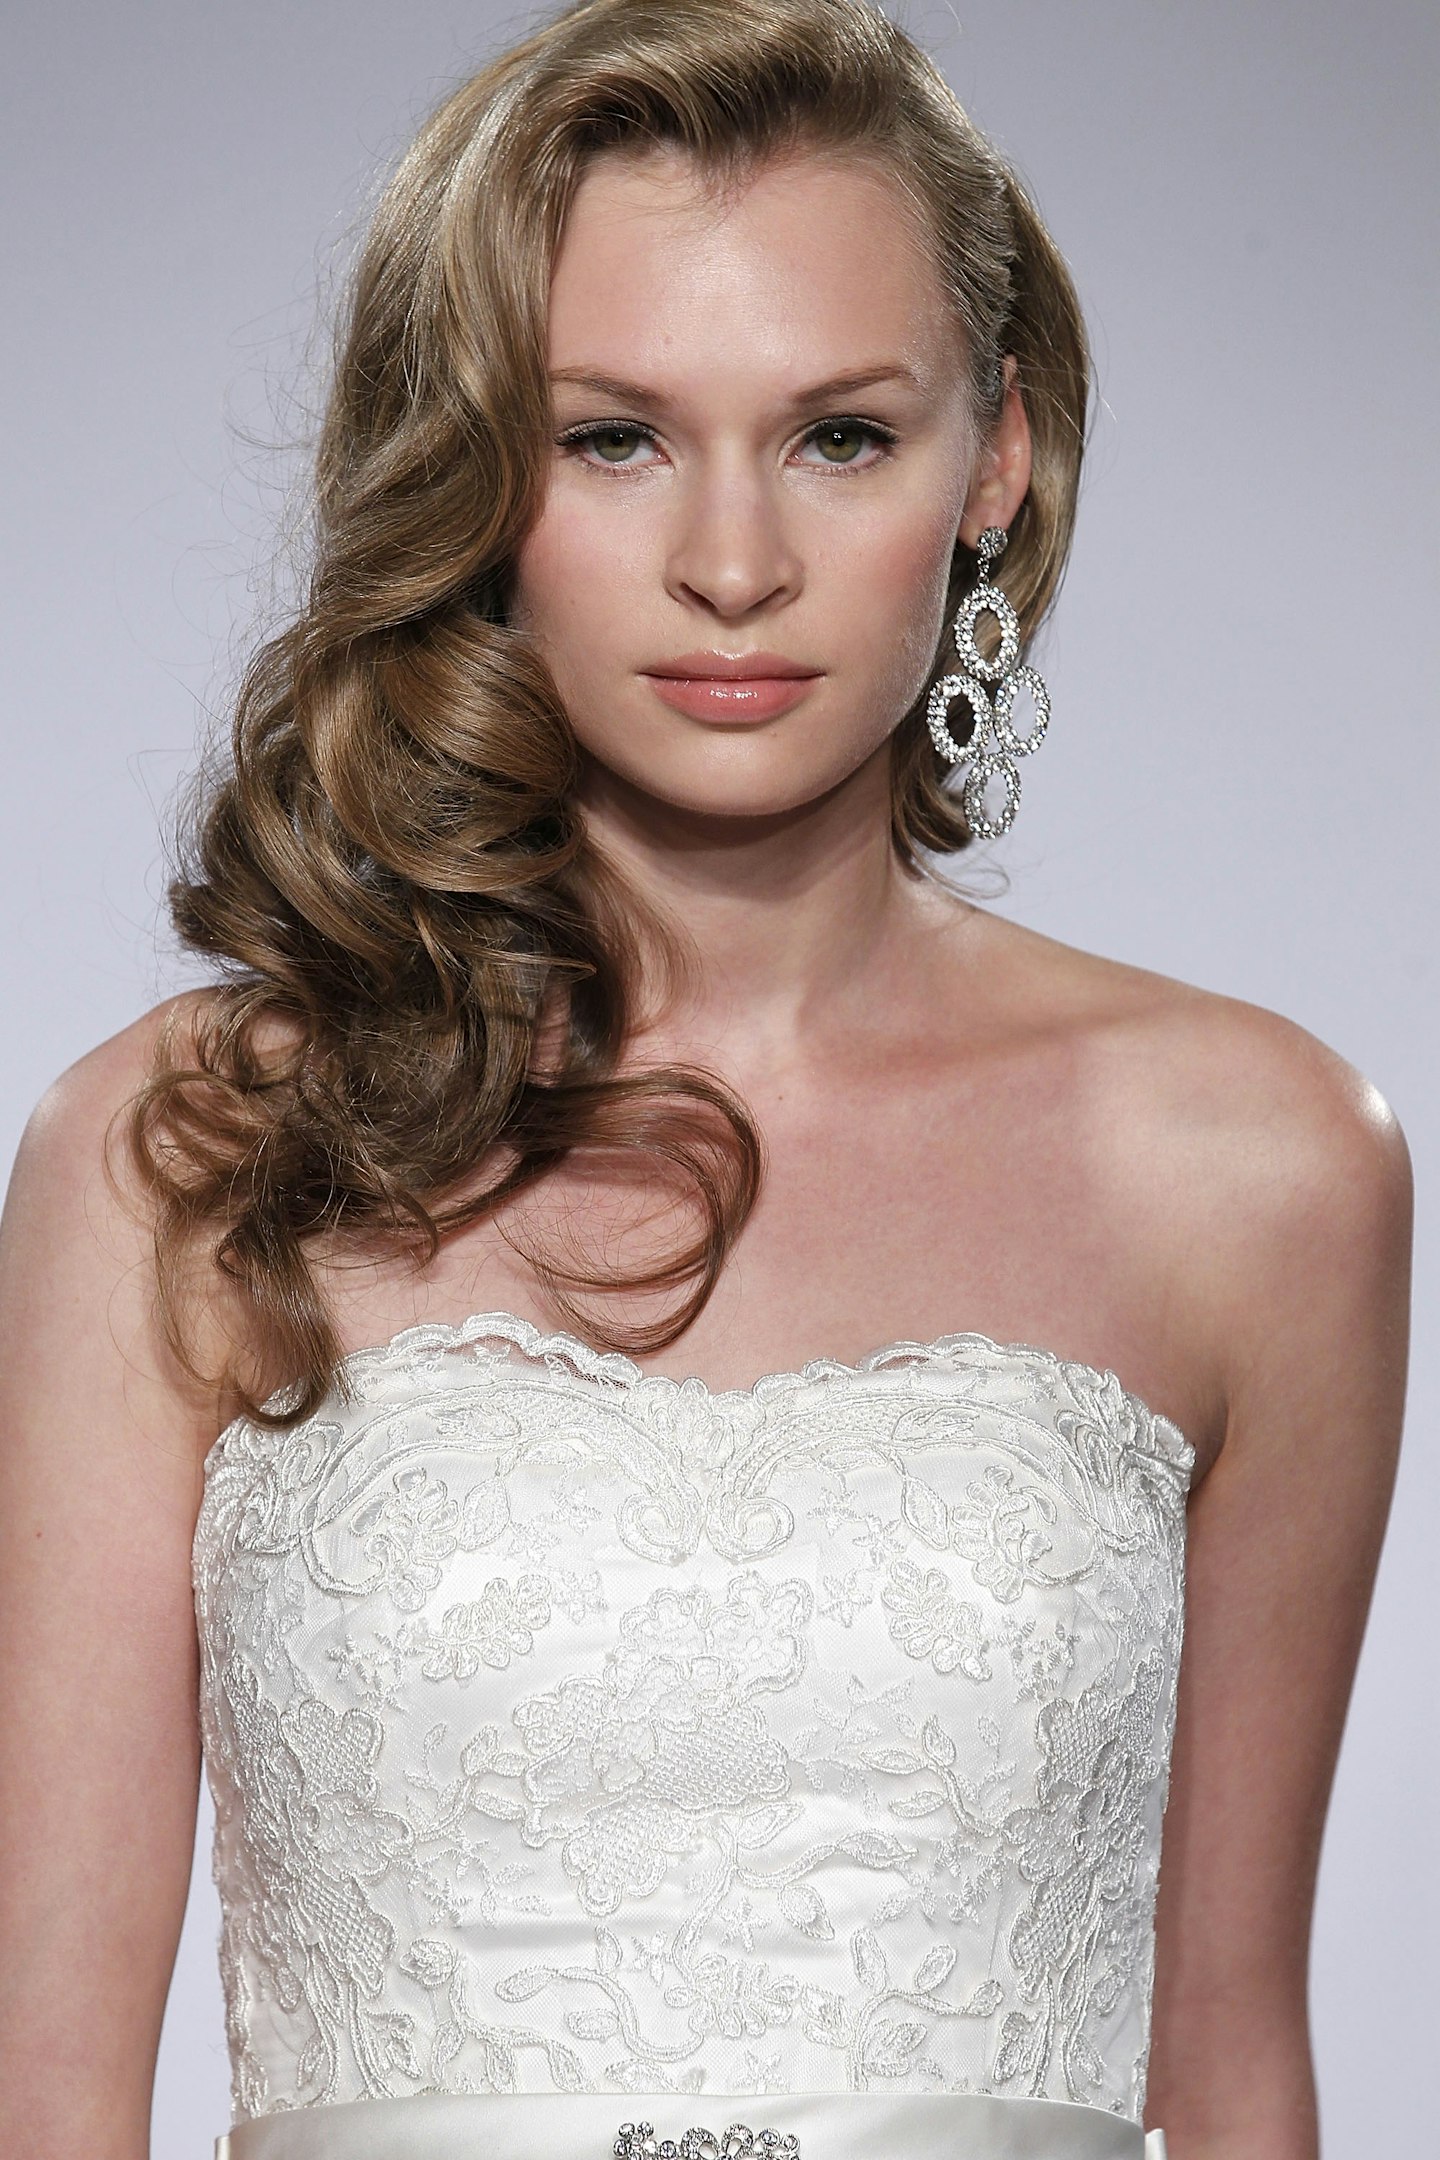 Wedding hairstyle ideas - Bridal hair trends